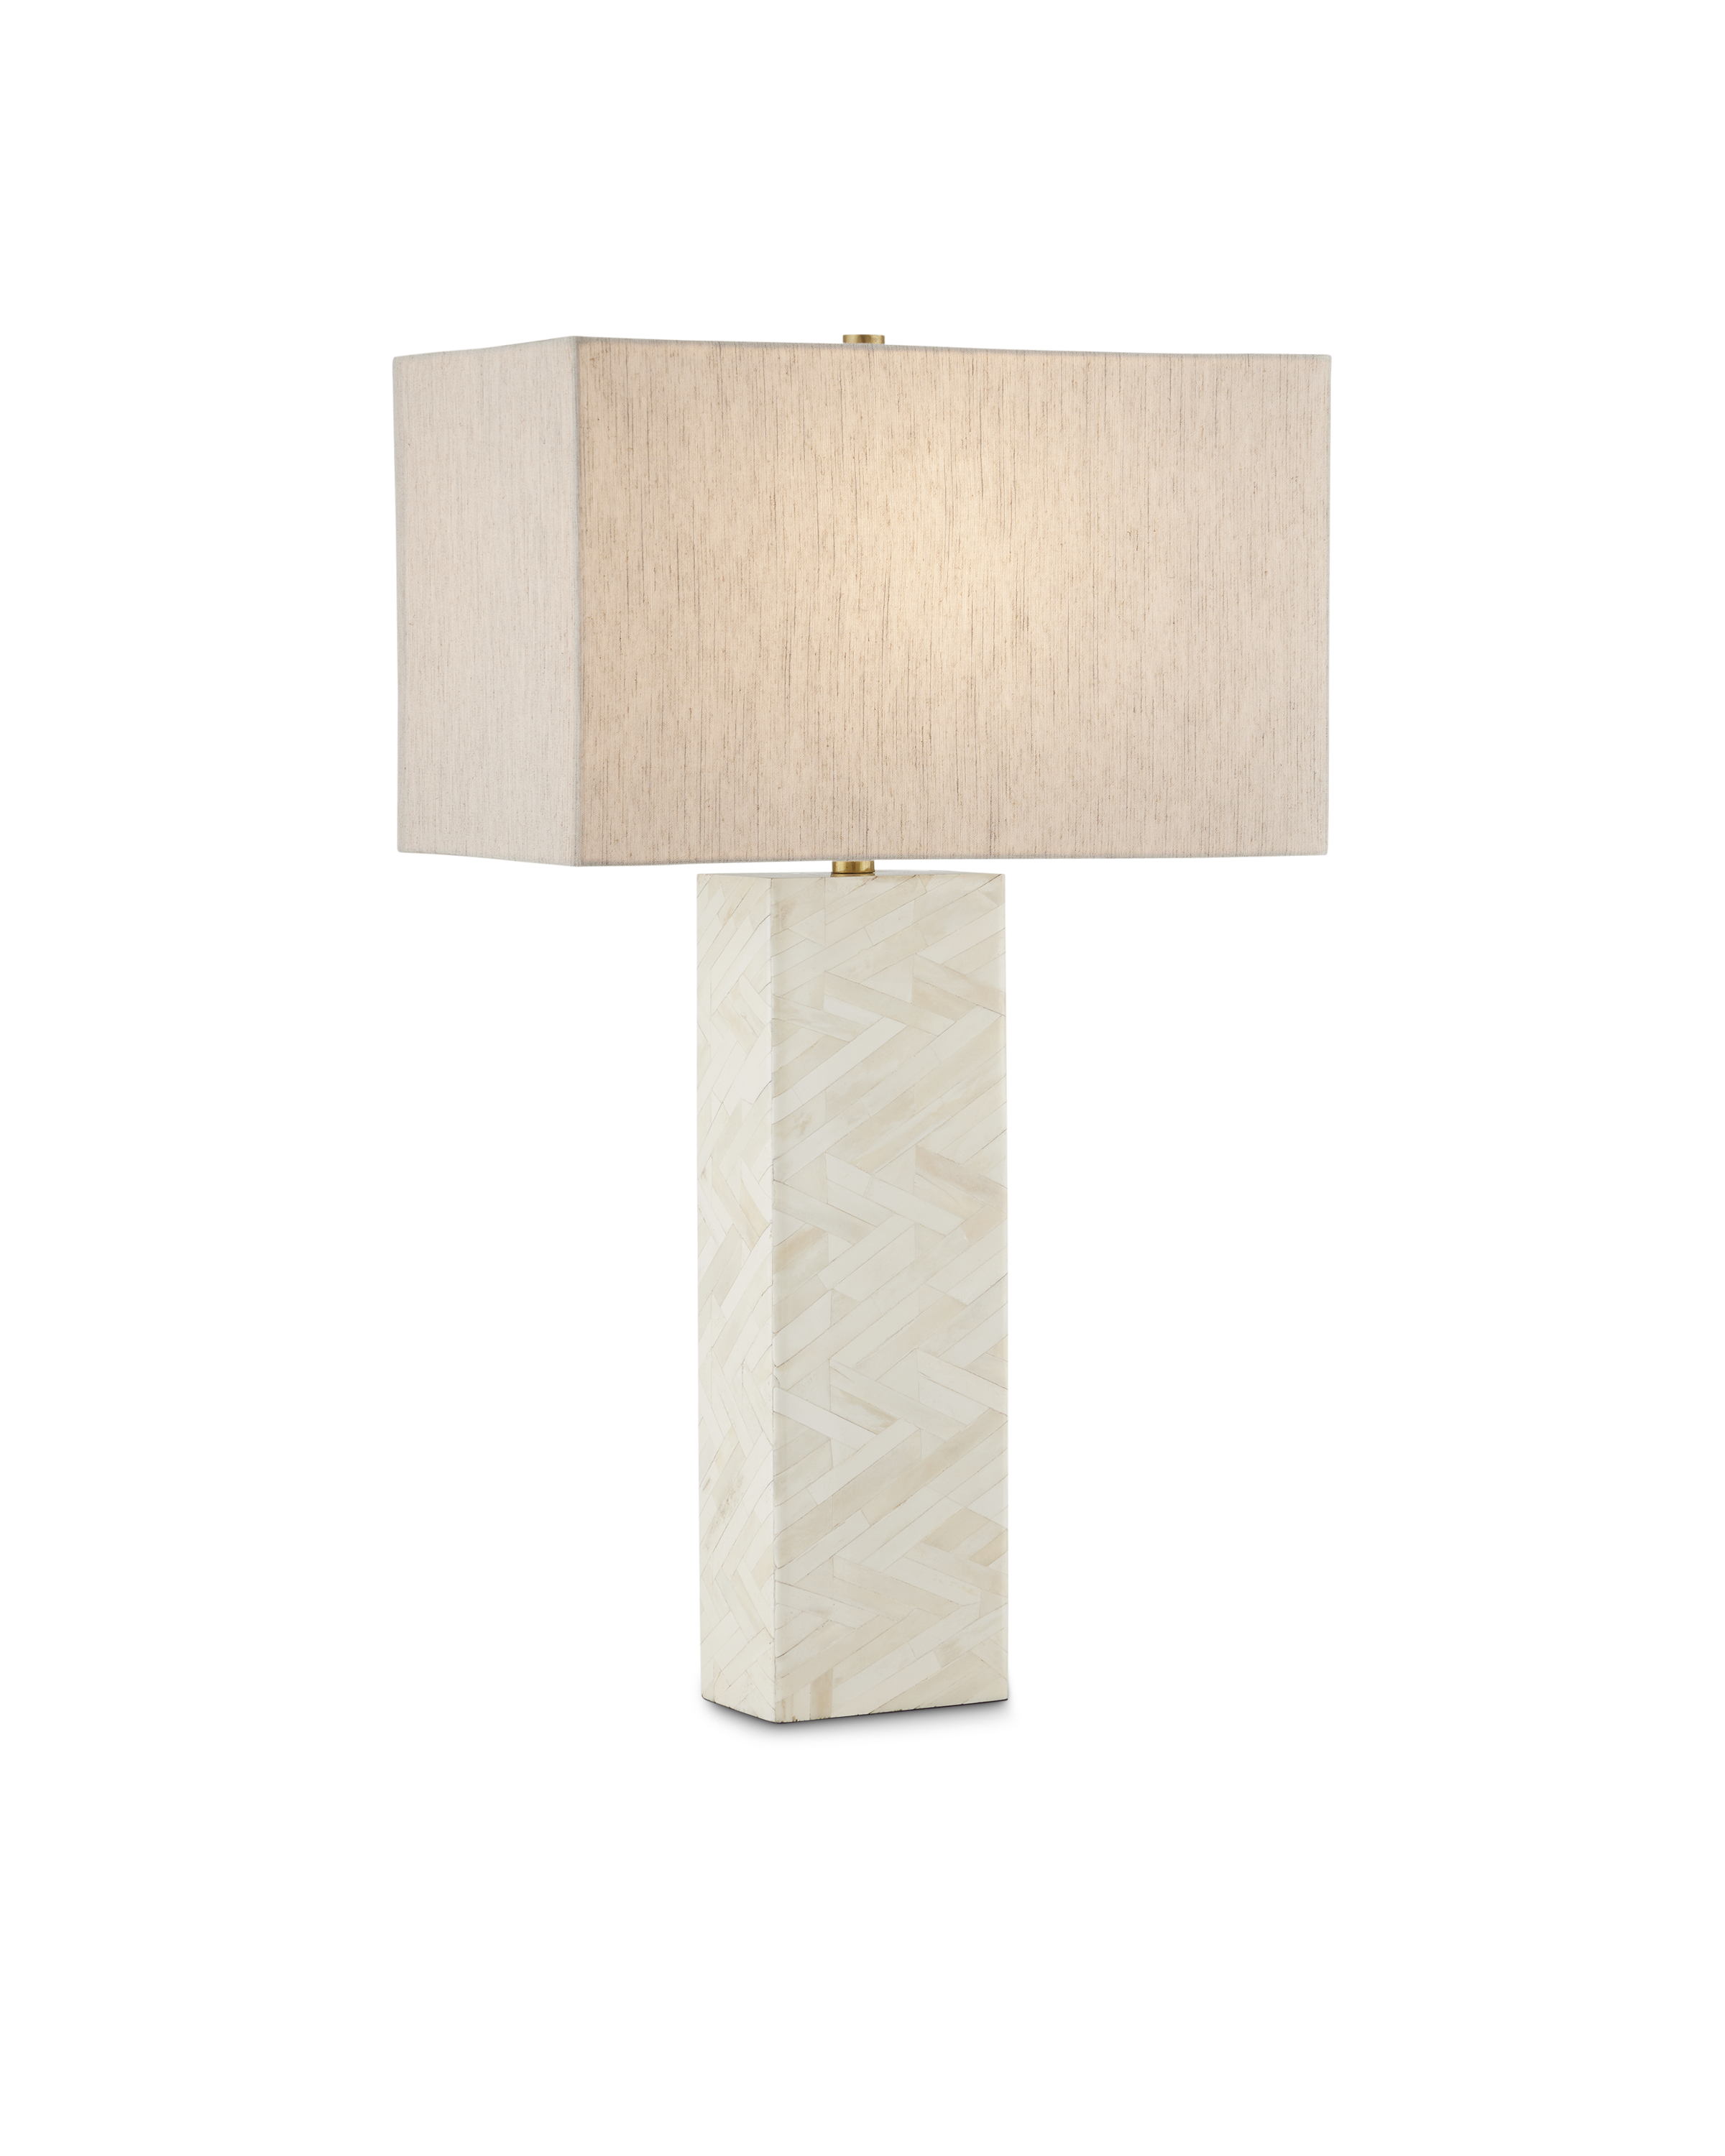 Elegy White Table Lamp